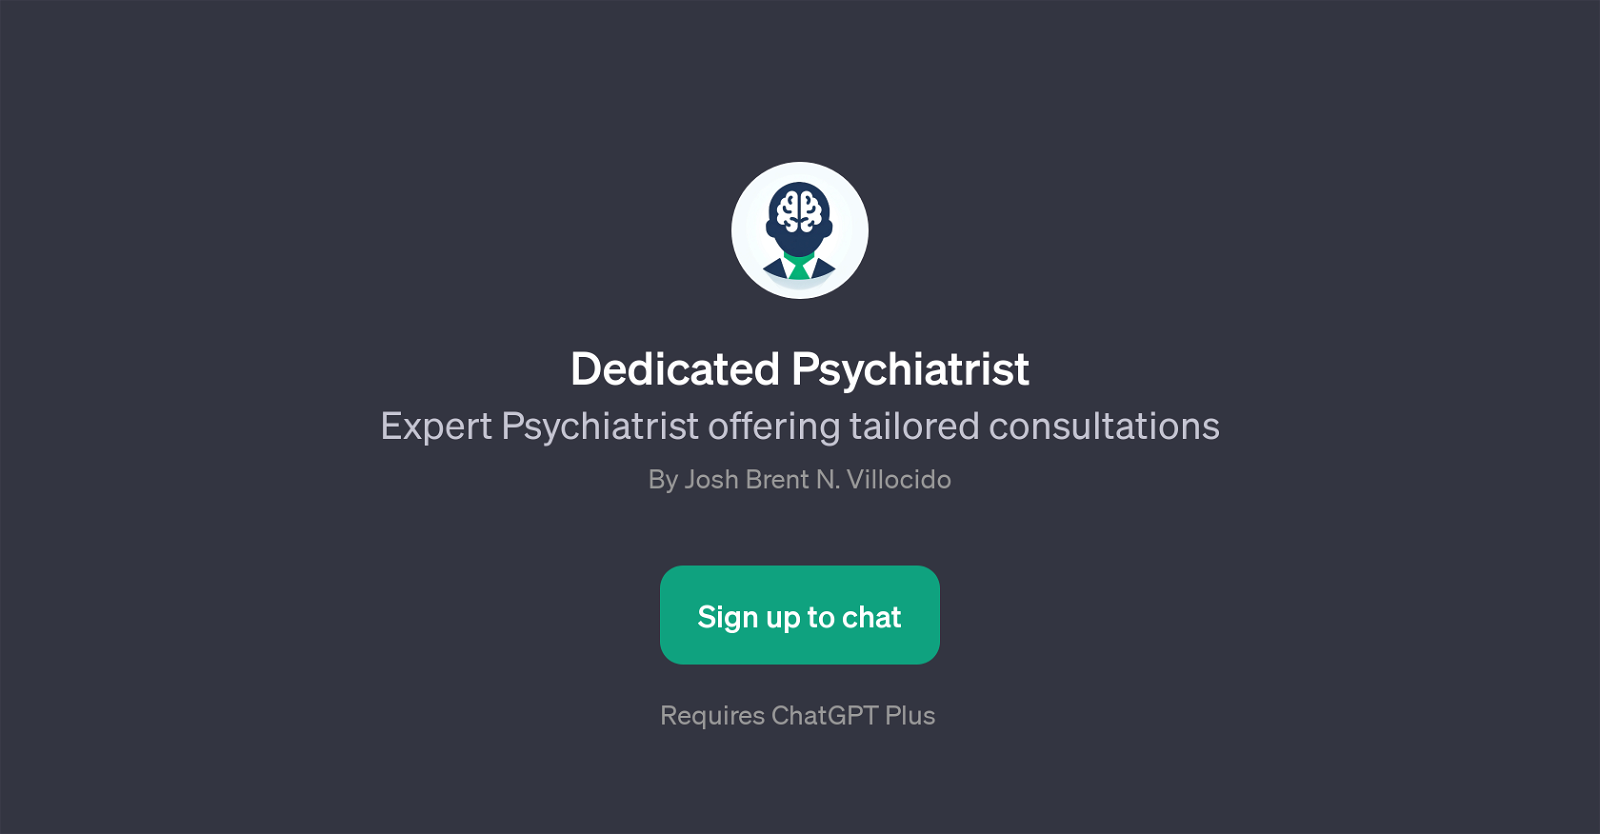 Dedicated Psychiatrist website